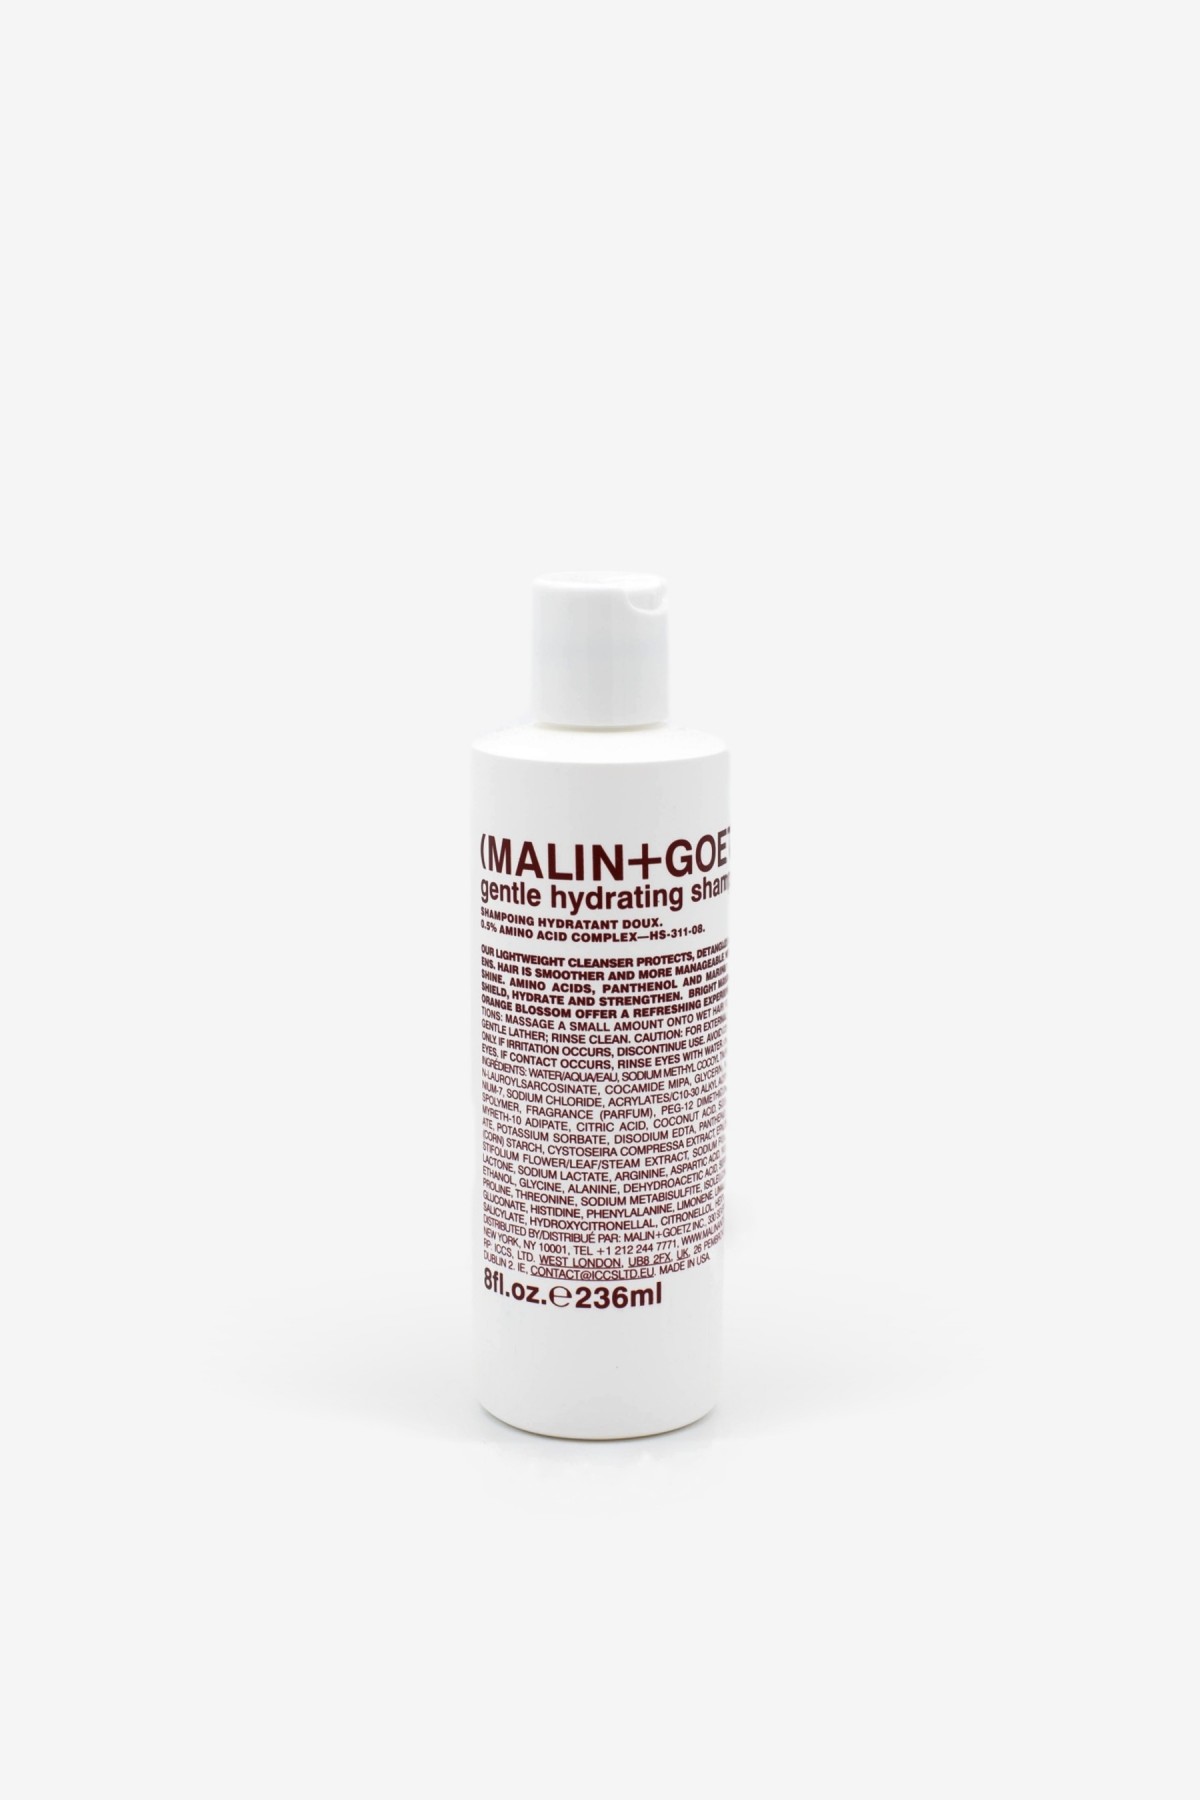 Malin+Goetz Gentle Hydrating Shampoo 236ml in 